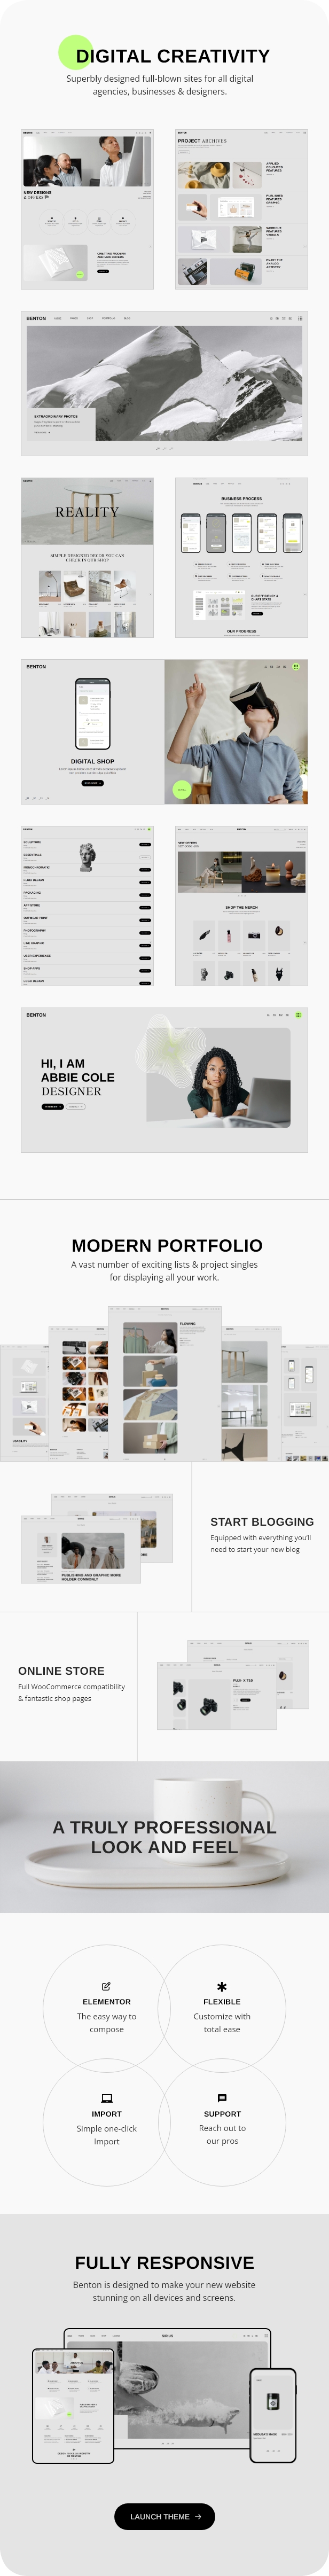 Benton - Digital Agency & Design Theme - 2